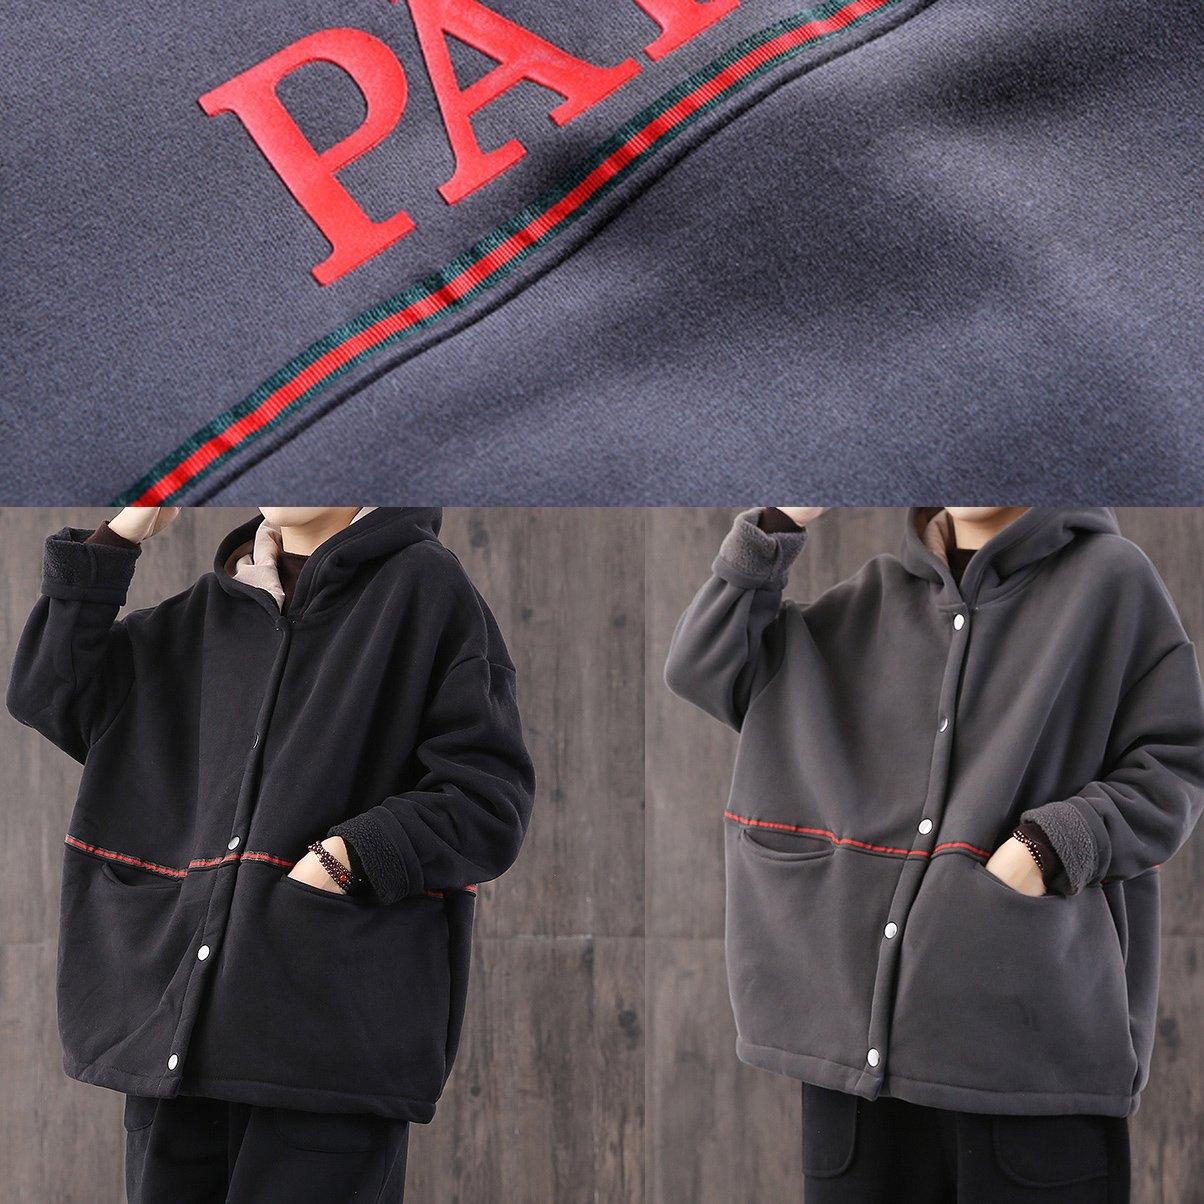 Italian hooded alphabet cotton tunic top design black blouses - Omychic